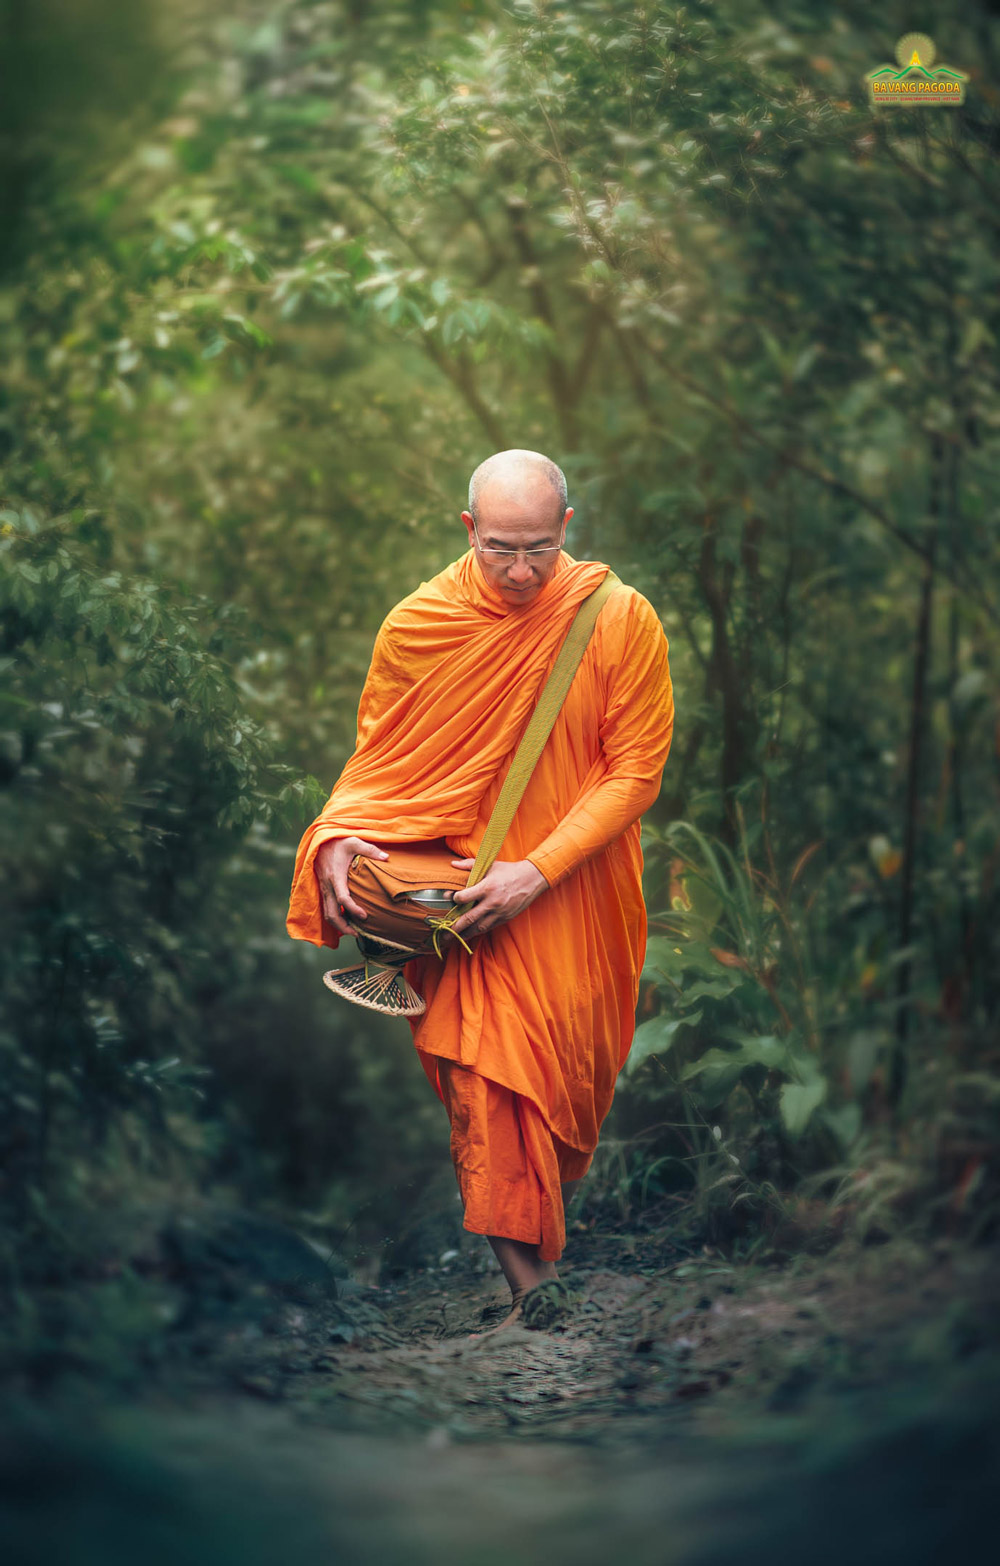 Beyond worldly desires the merits of the Sangha